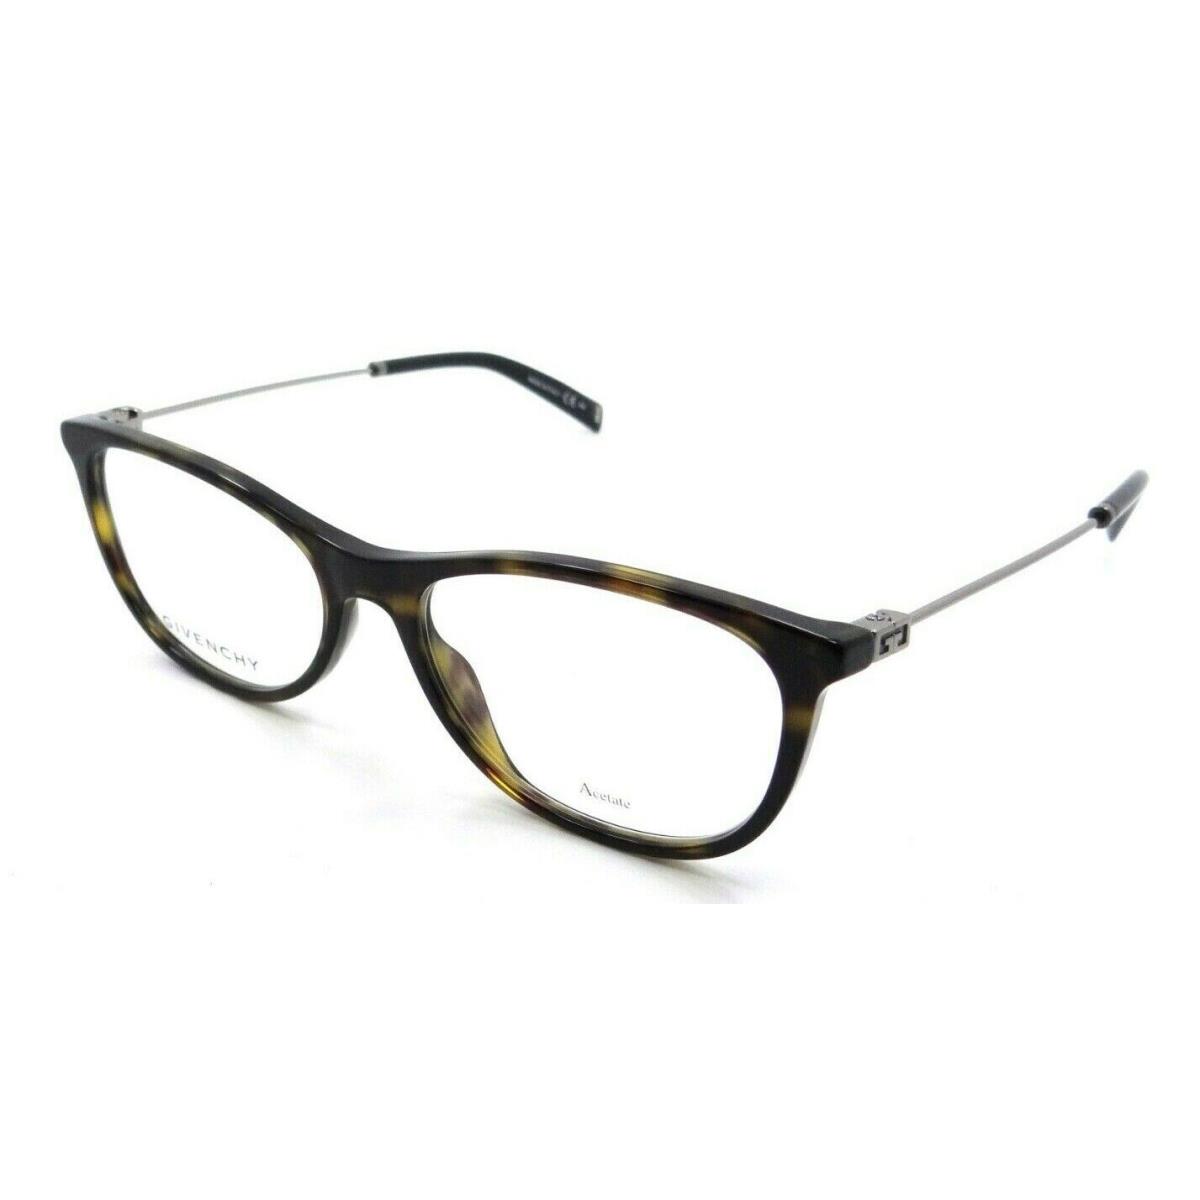 Givenchy Eyeglasses Frames GV 0129 086 52-16-145 Dark Havana Made in Italy